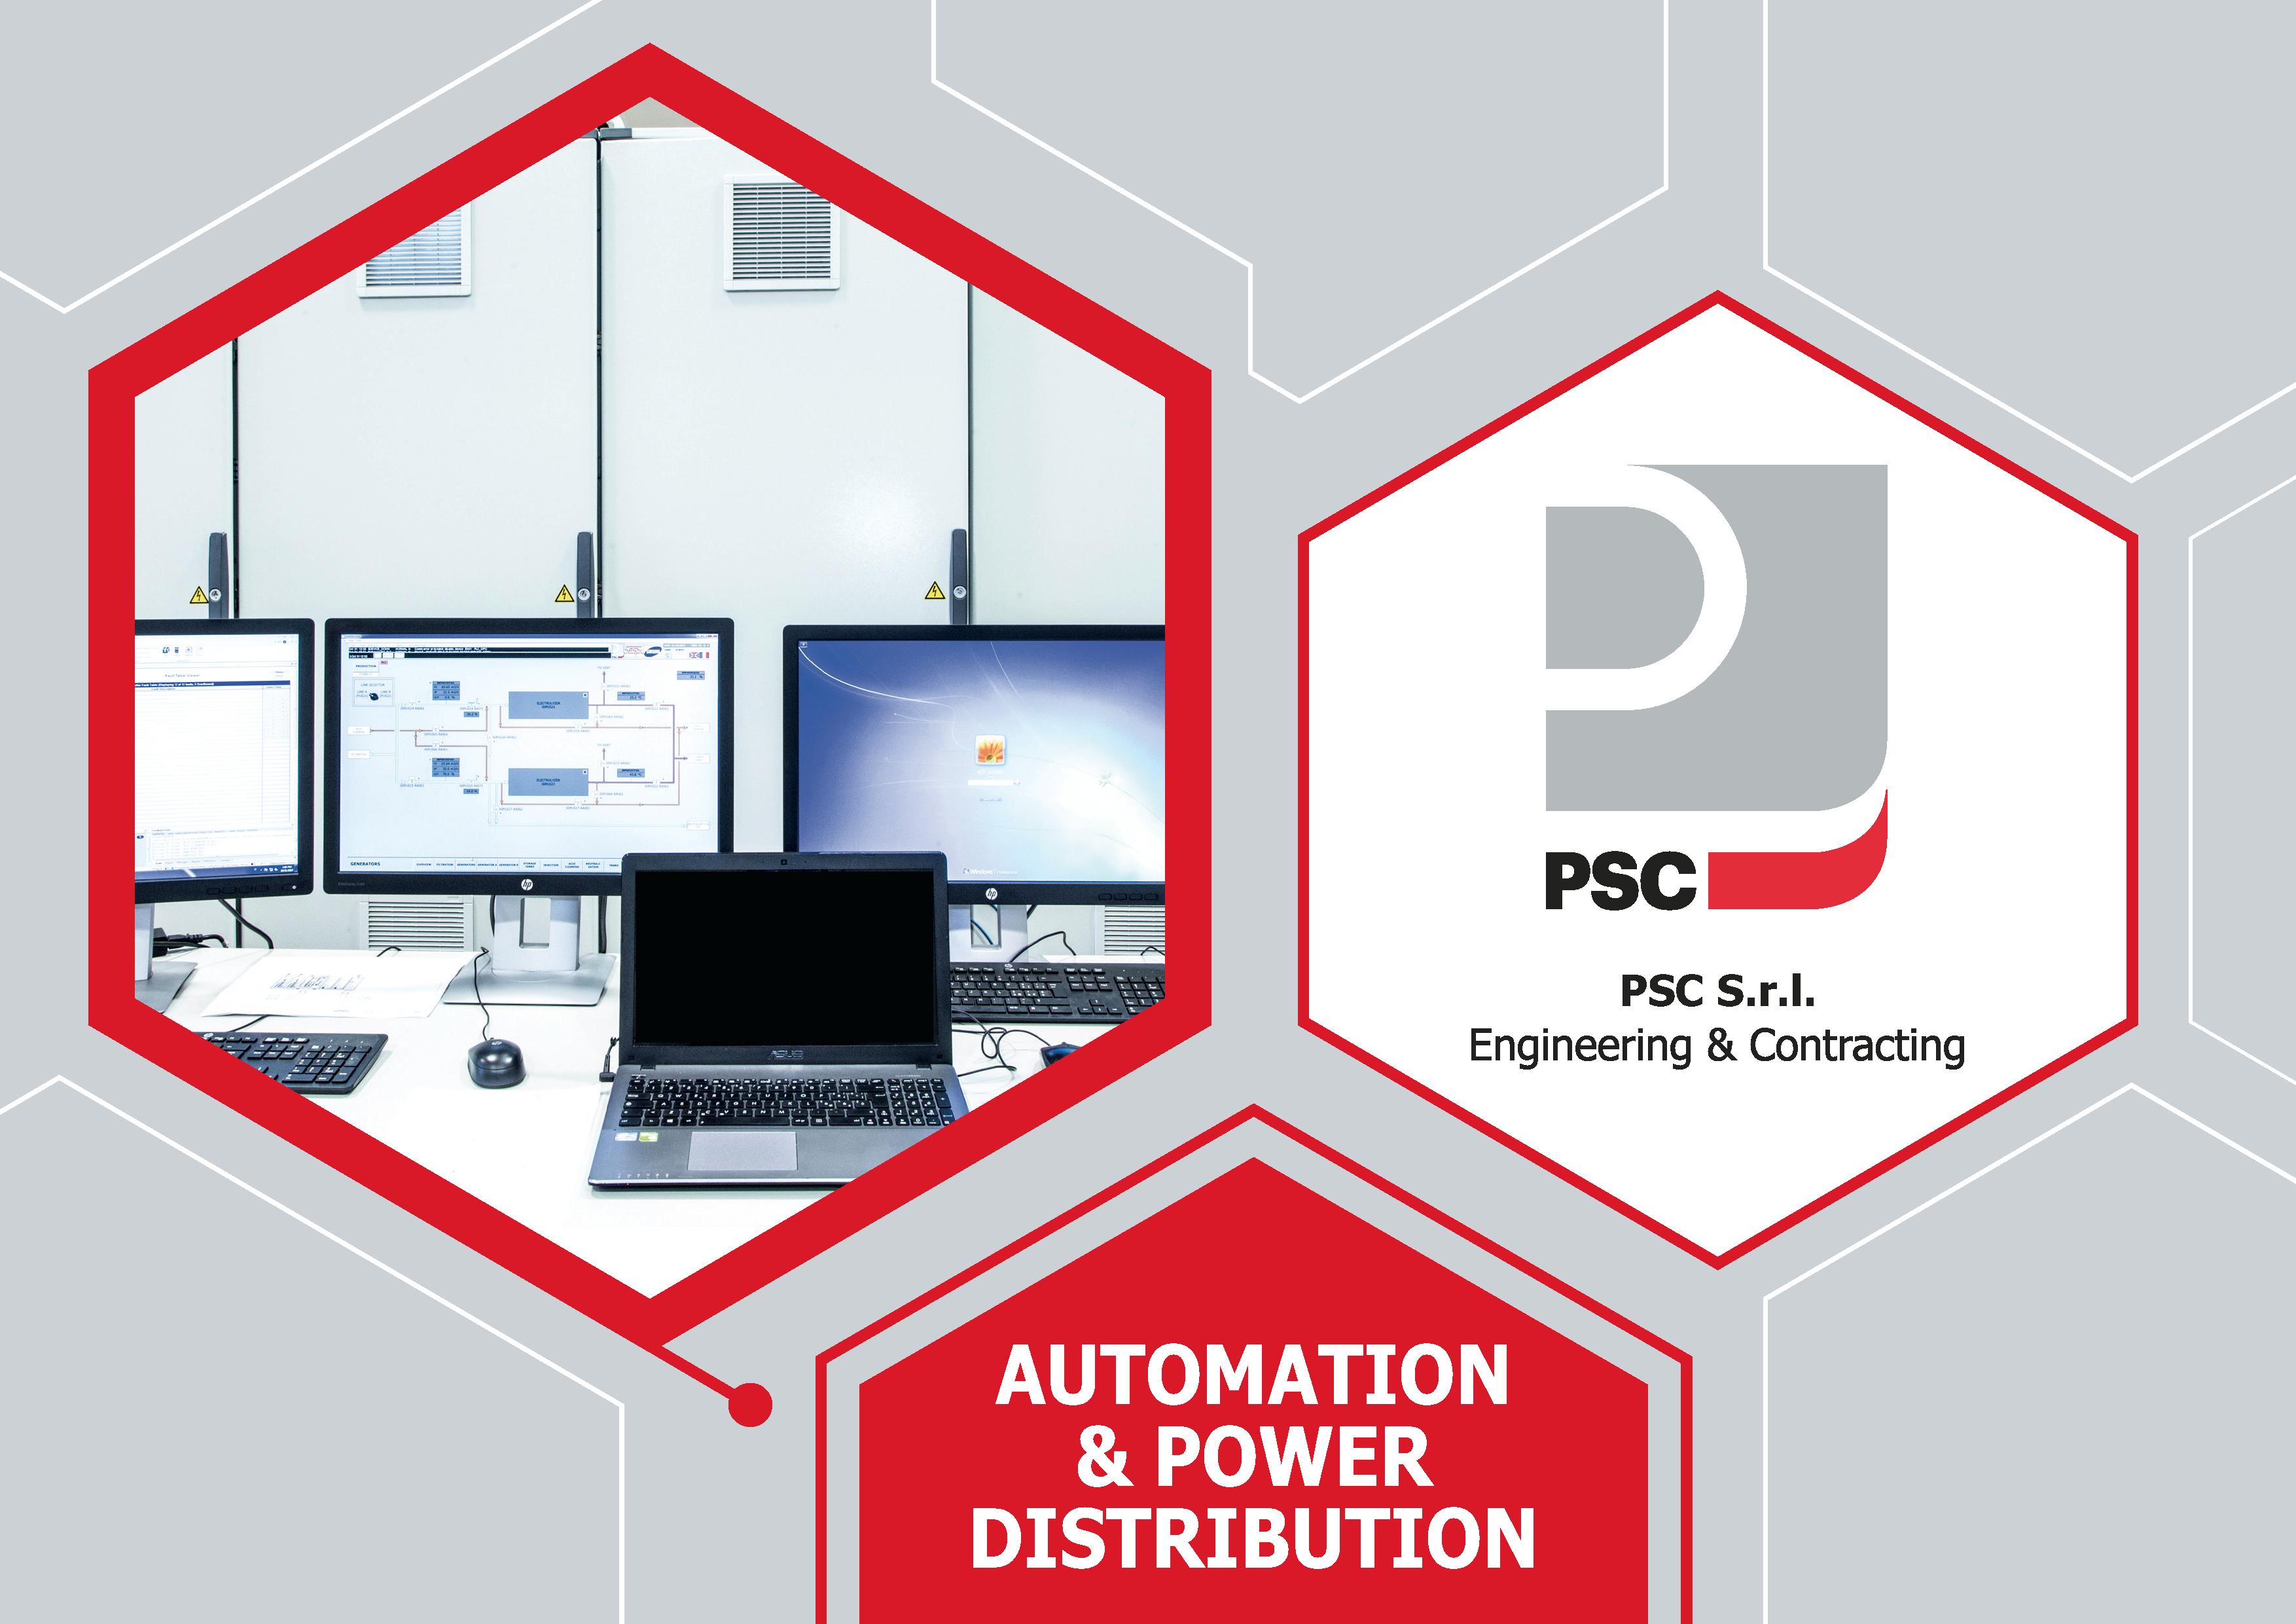 PSC Brochure Automation & Power Distribution